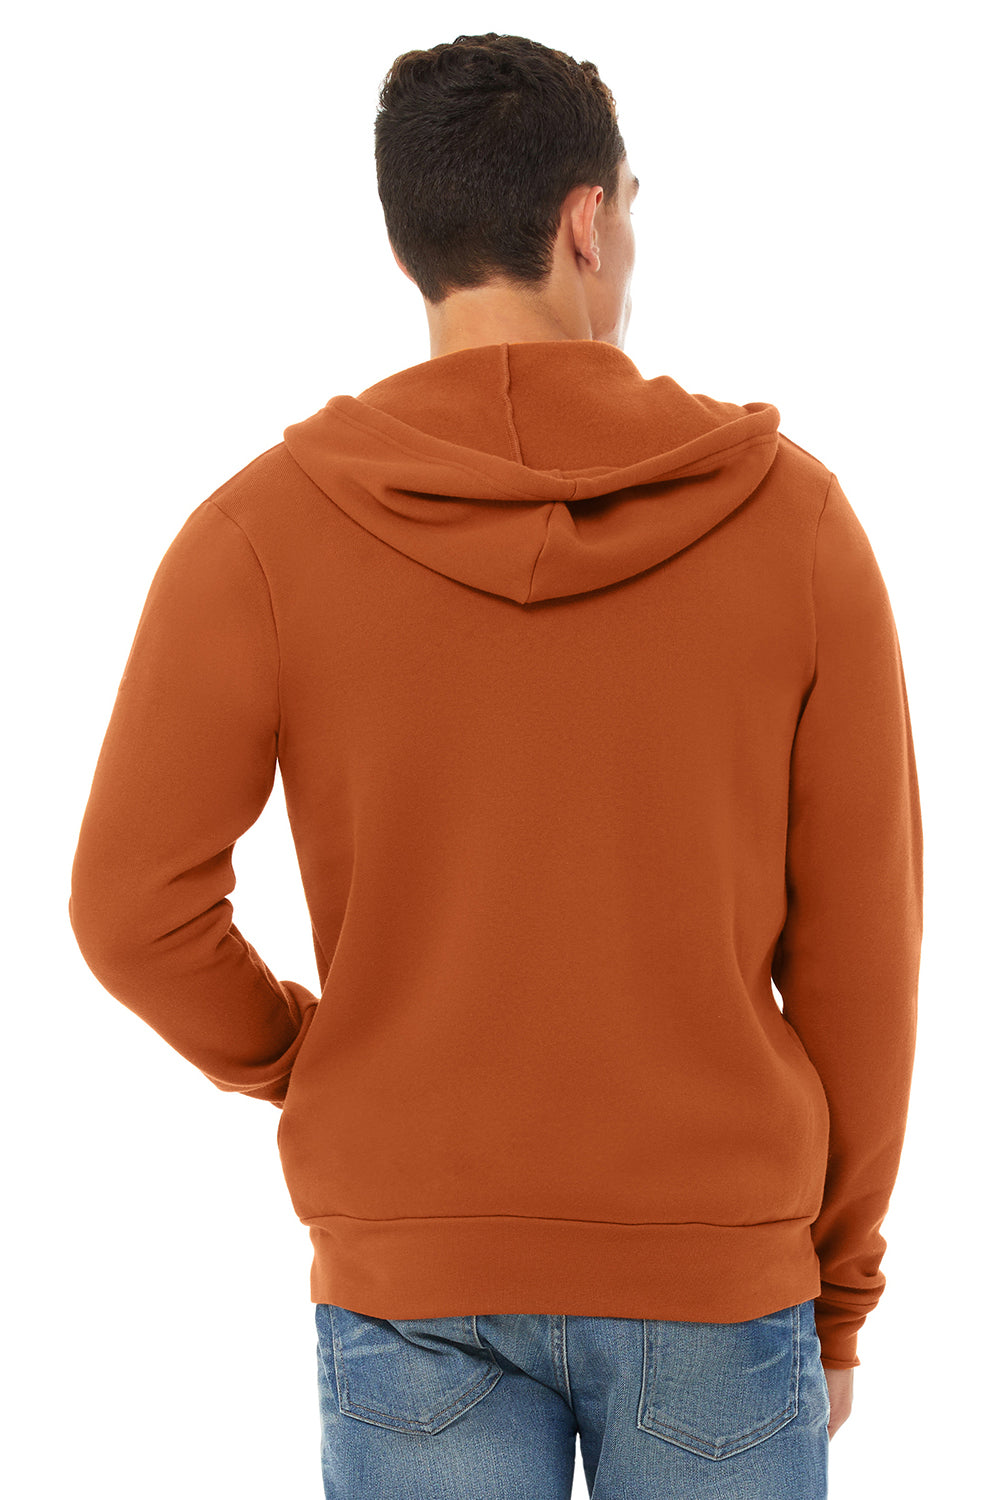 Bella + Canvas BC3739/3739 Mens Fleece Full Zip Hooded Sweatshirt Hoodie Autumn Orange Model Back